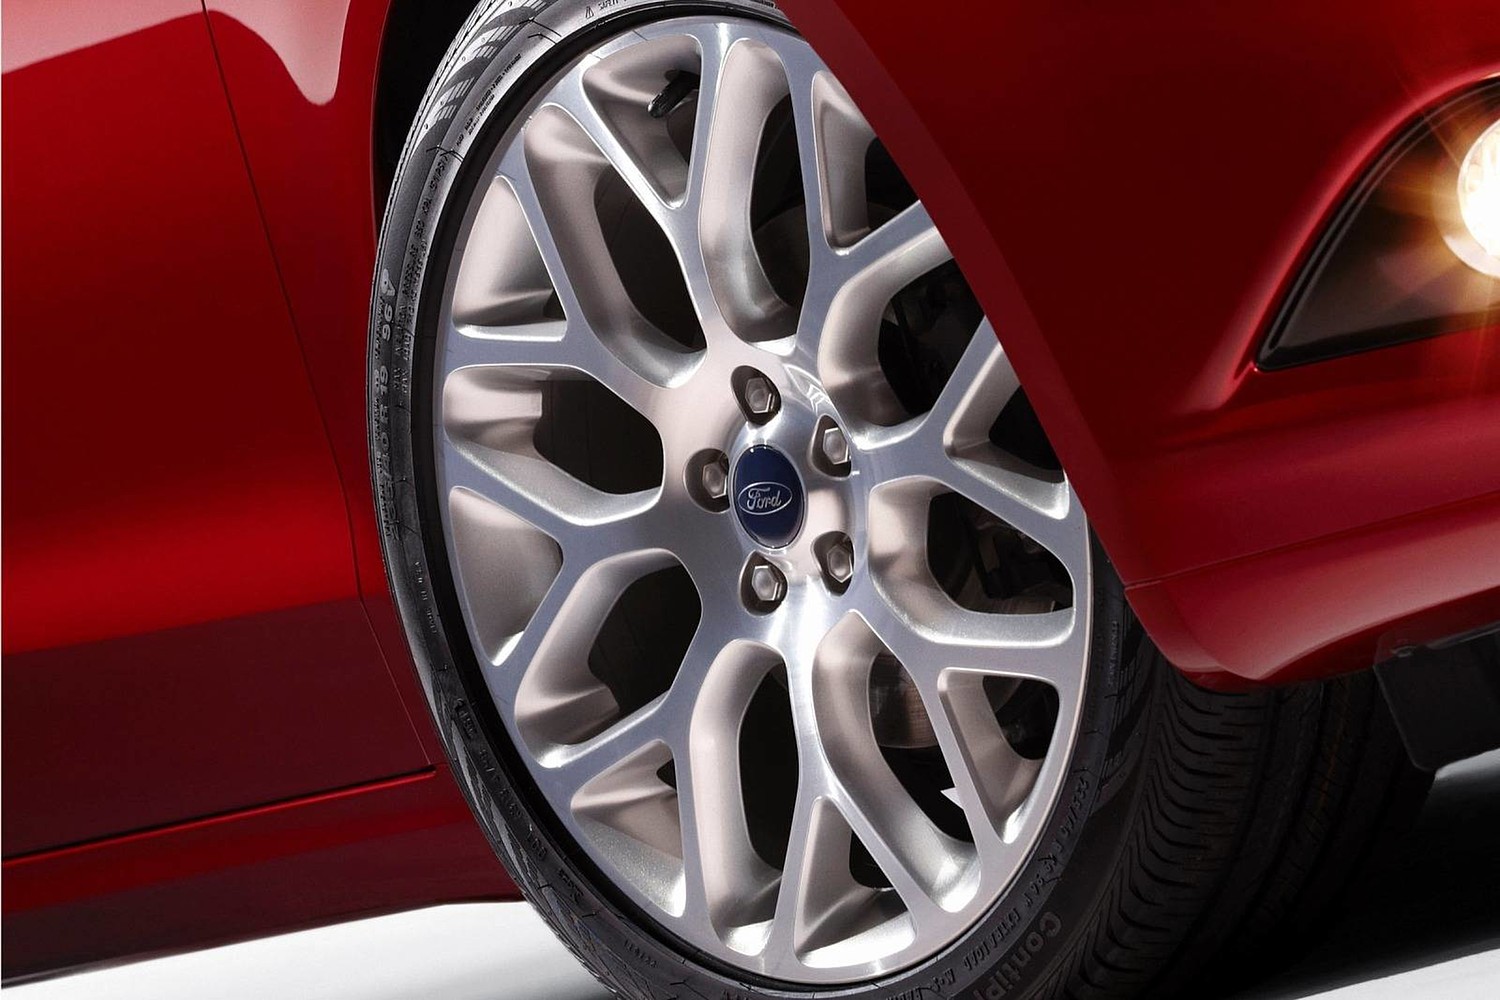 Ford Fusion Titanium Sedan Wheel (2014 model year shown)